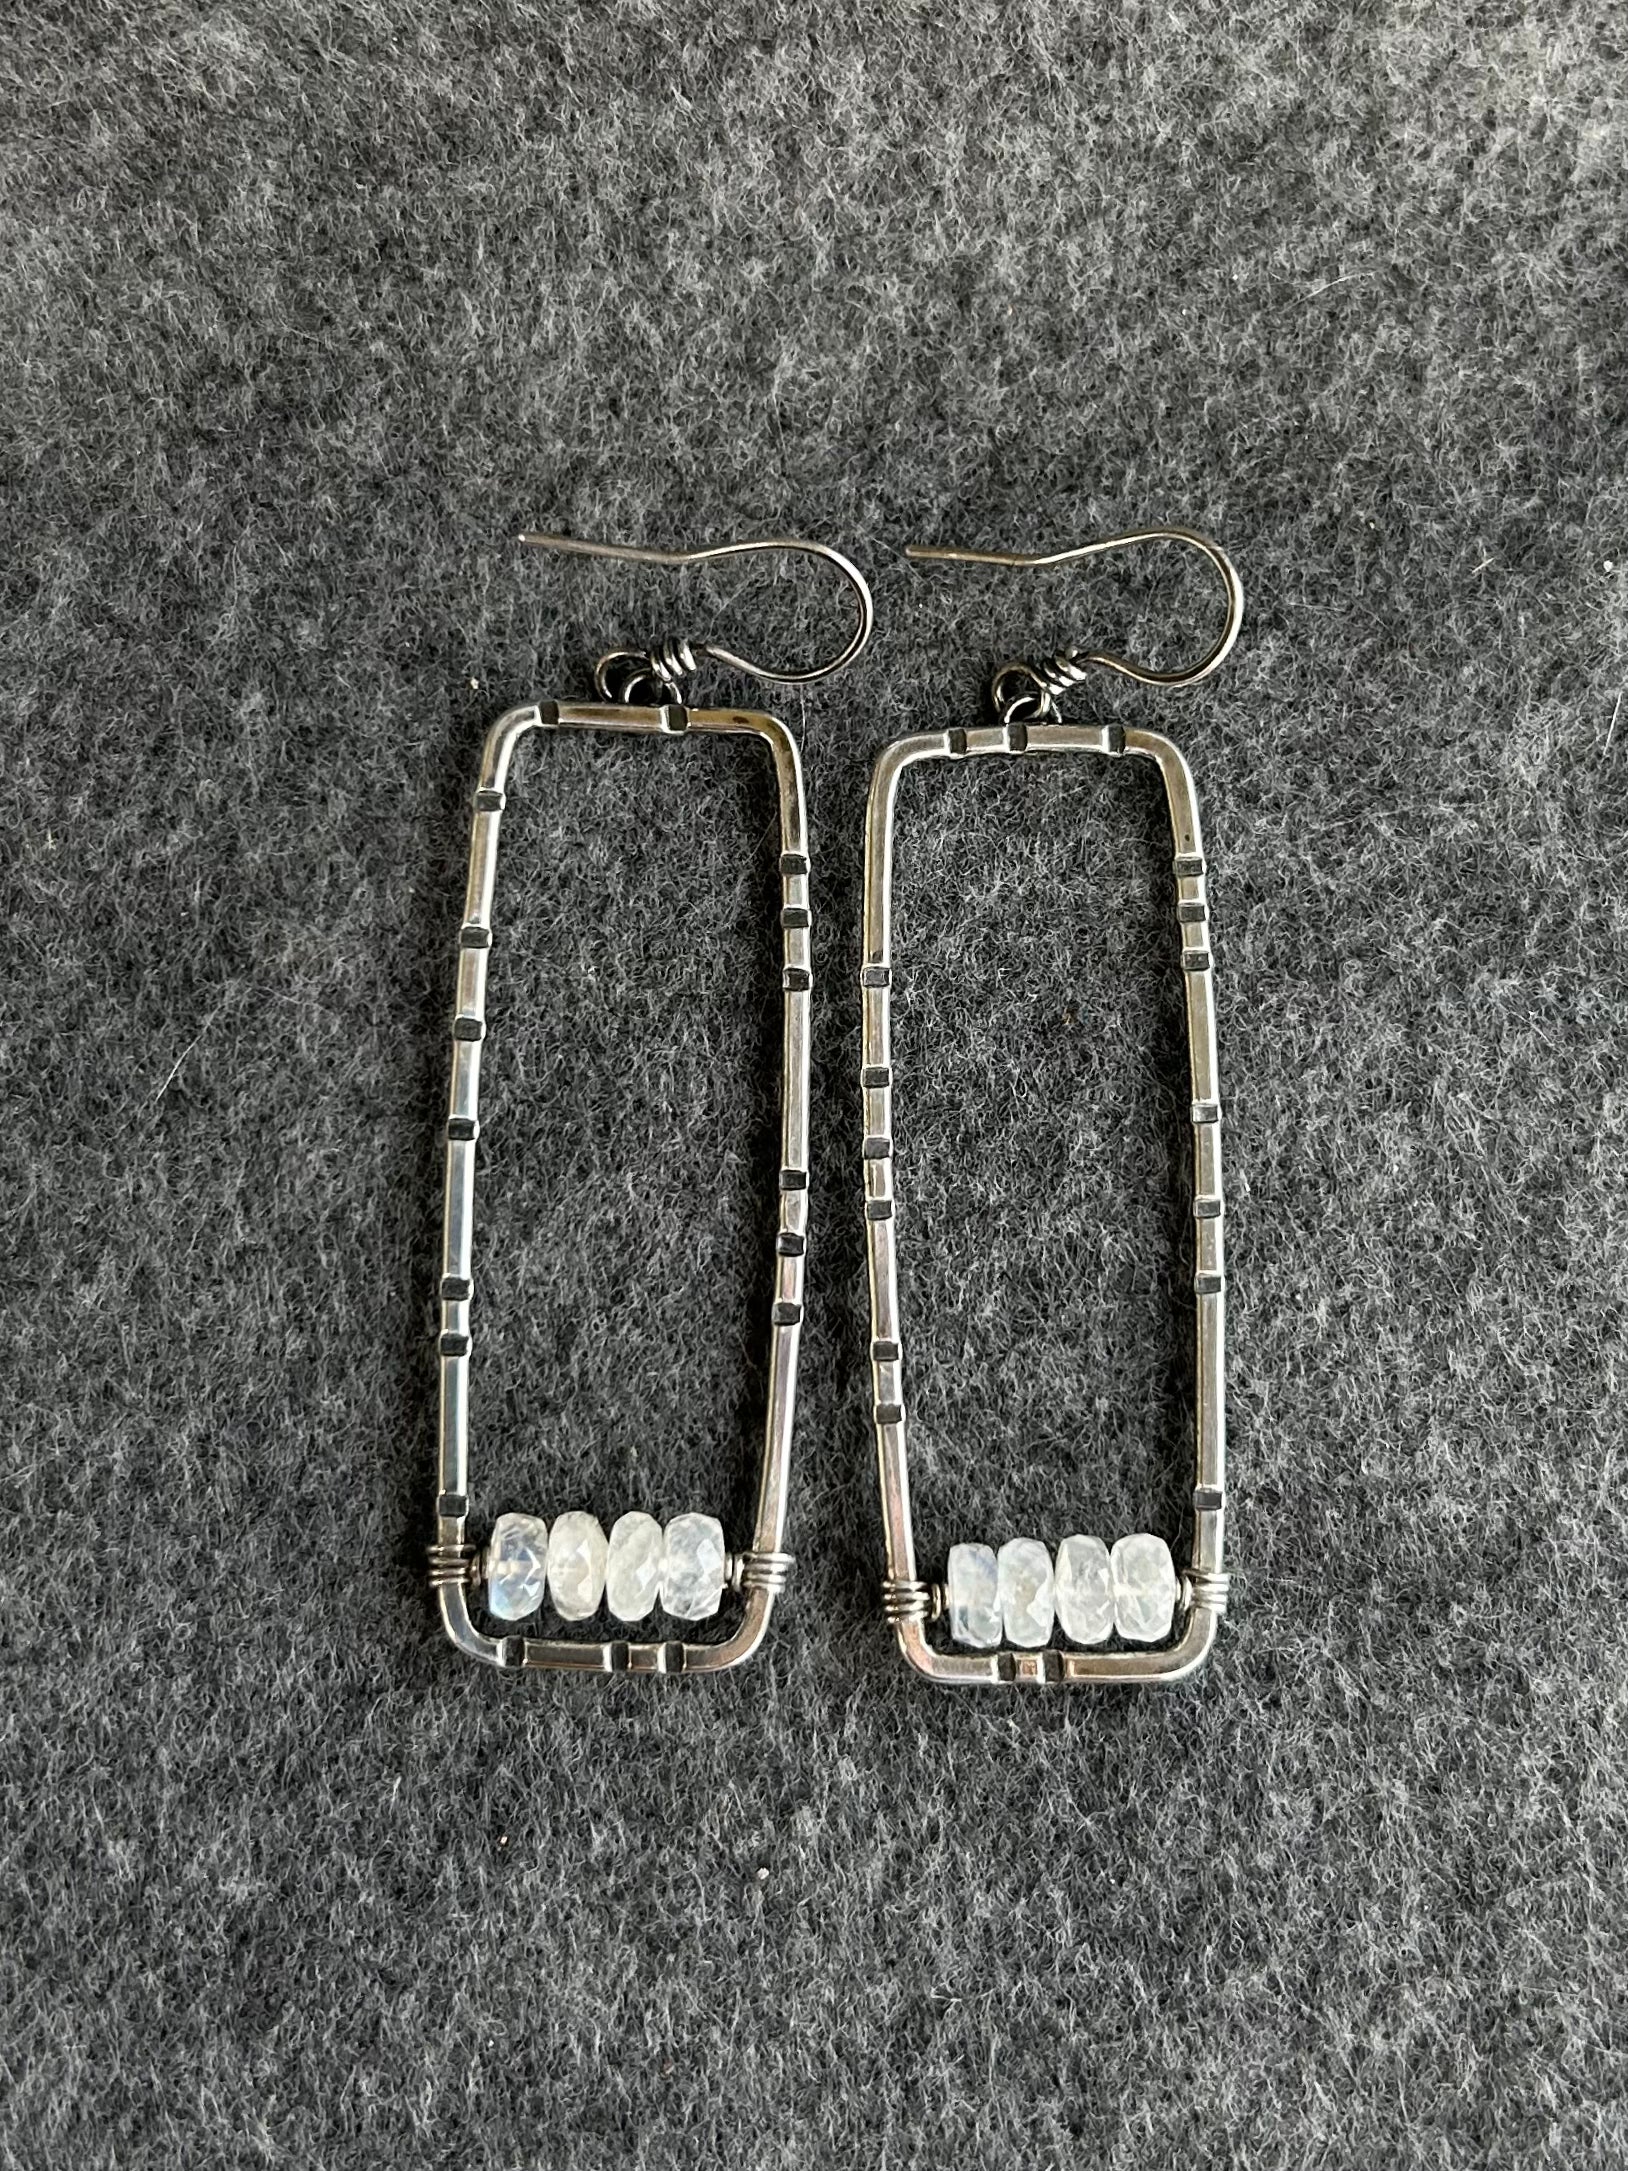 Anvil Hoop Earrings with Stamped Sterling Silver and Rainbow Moonstone